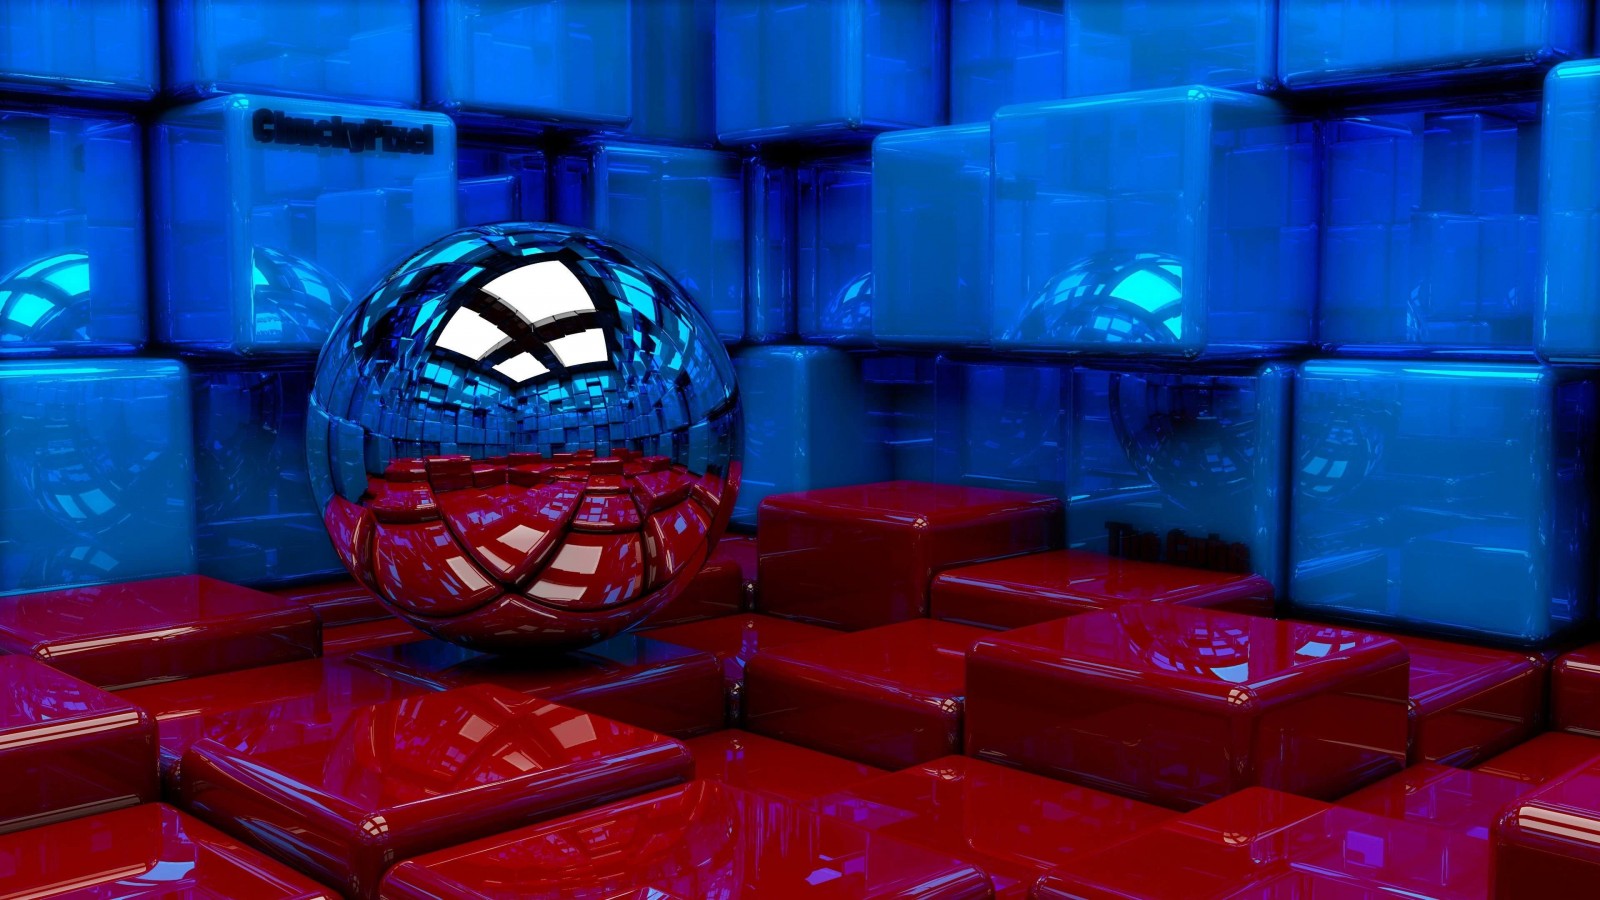 Metallic Sphere Reflecting The Cube Room Wallpaper for Desktop 1600x900